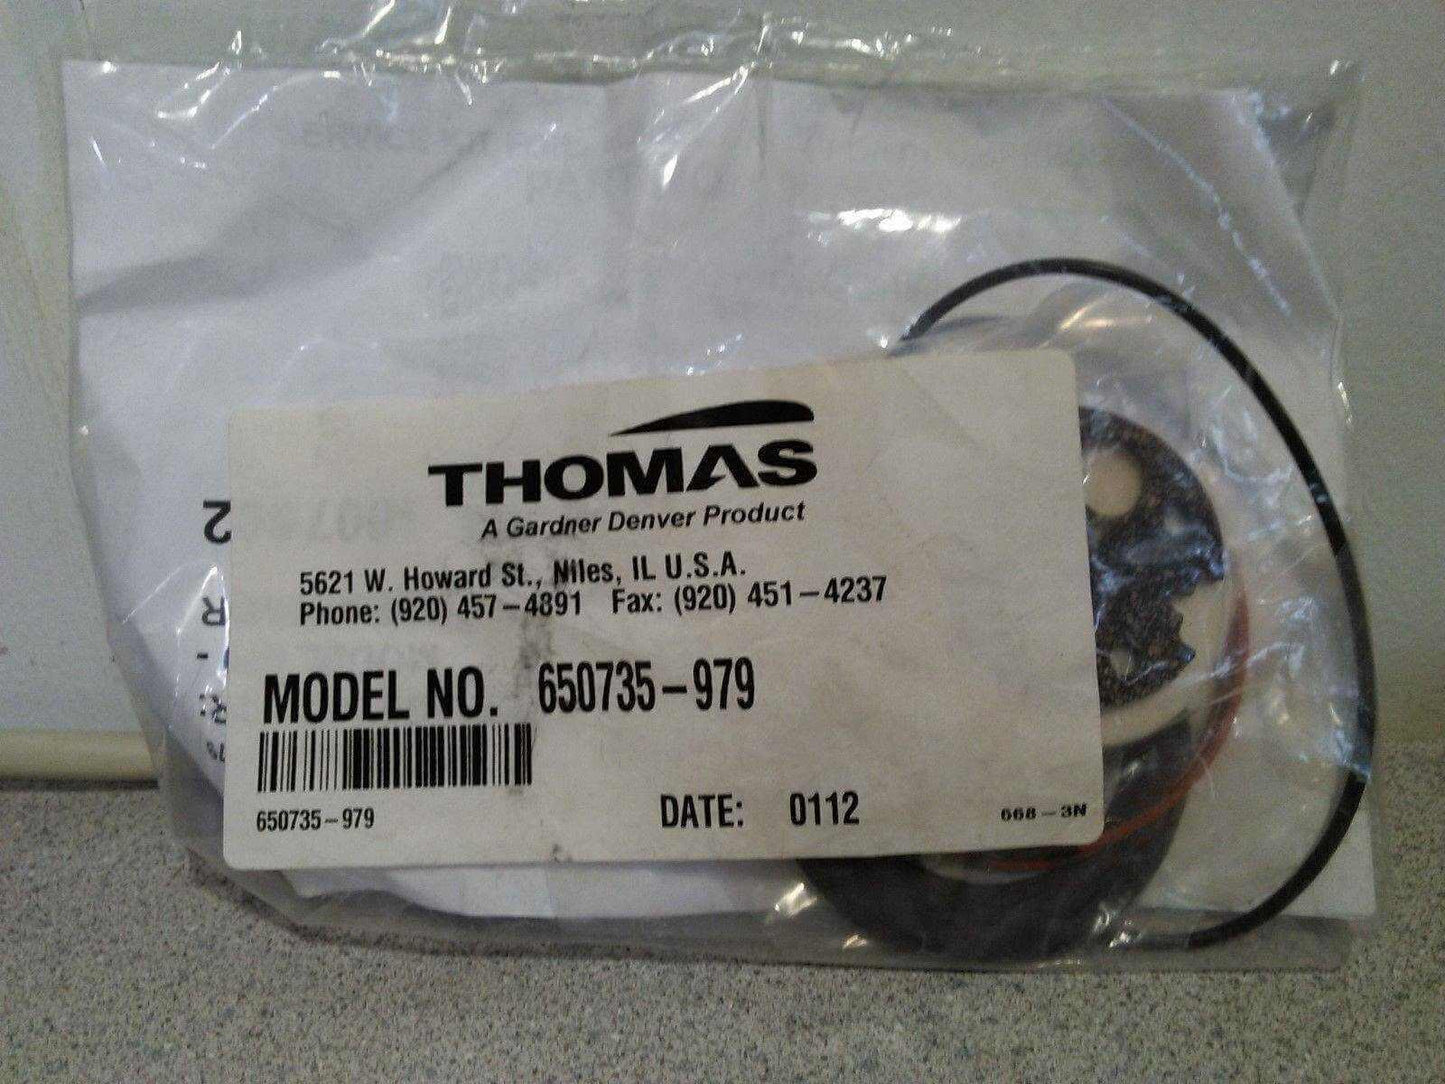 NEW Thomas Rebuild Service Kit 1007562 650735-979 for model 670 - 4 Port Compressor Warranty FREE Shipping - MBR Medicals